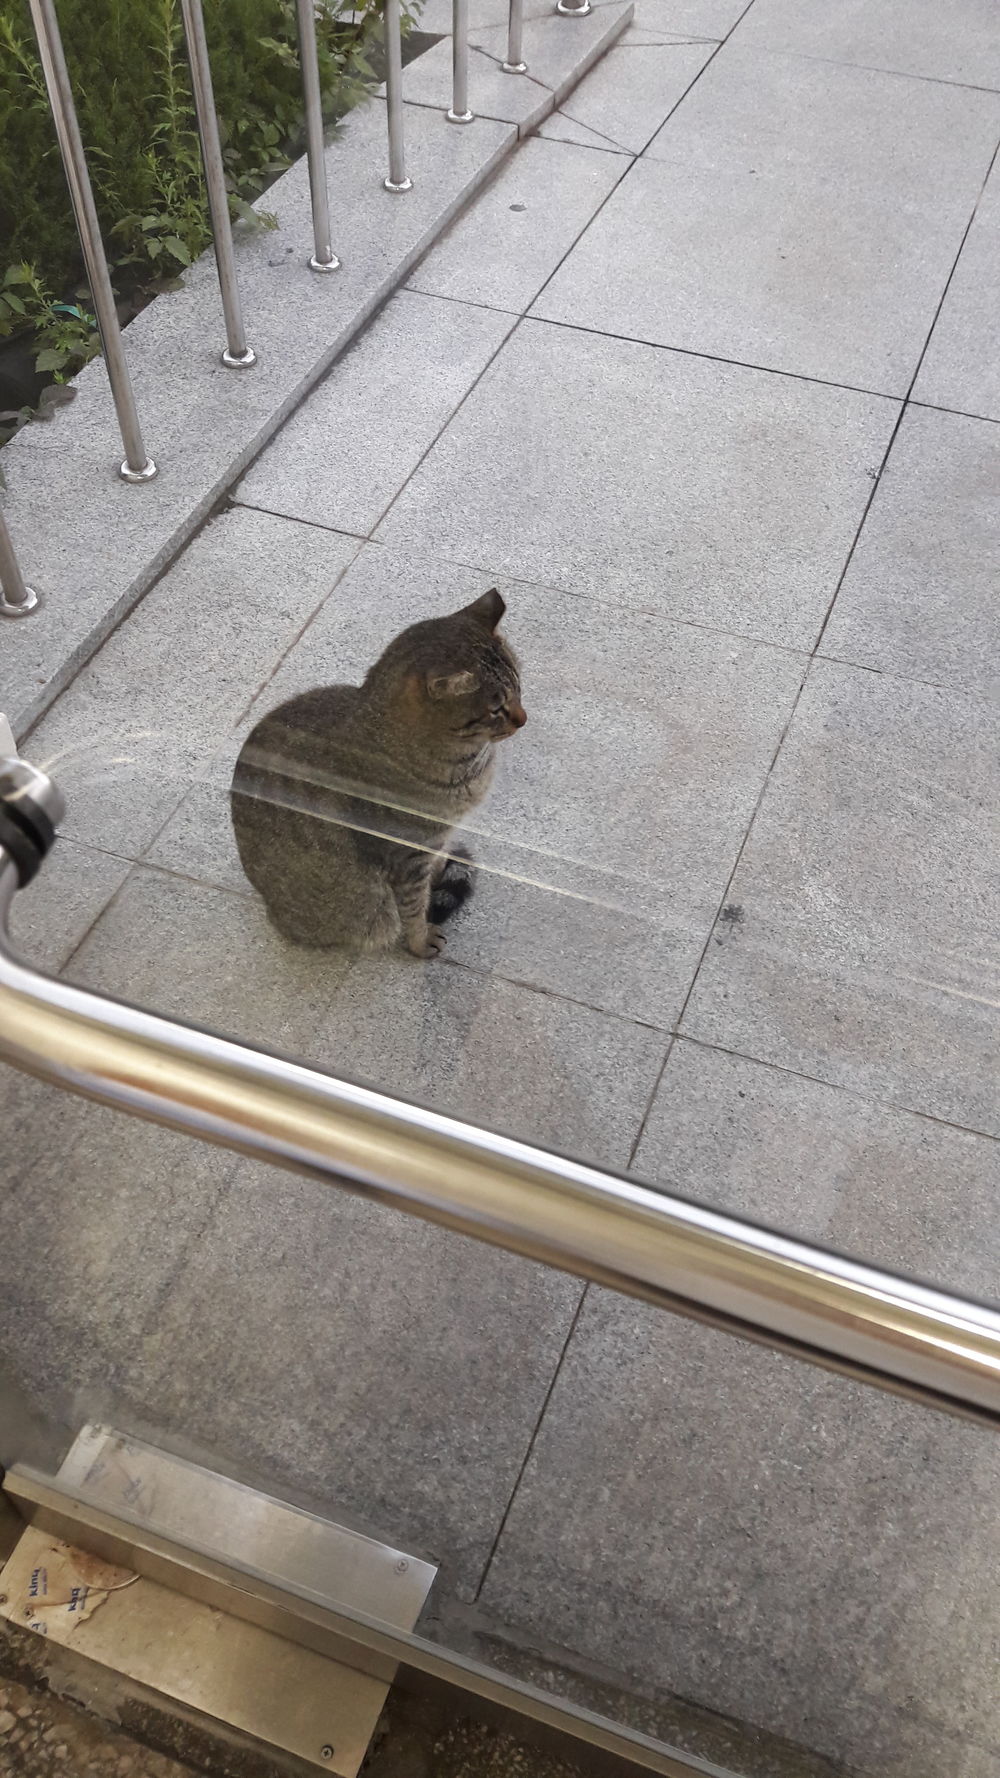 20170917_183128.jpg : 생물관 앞 고양이...☆